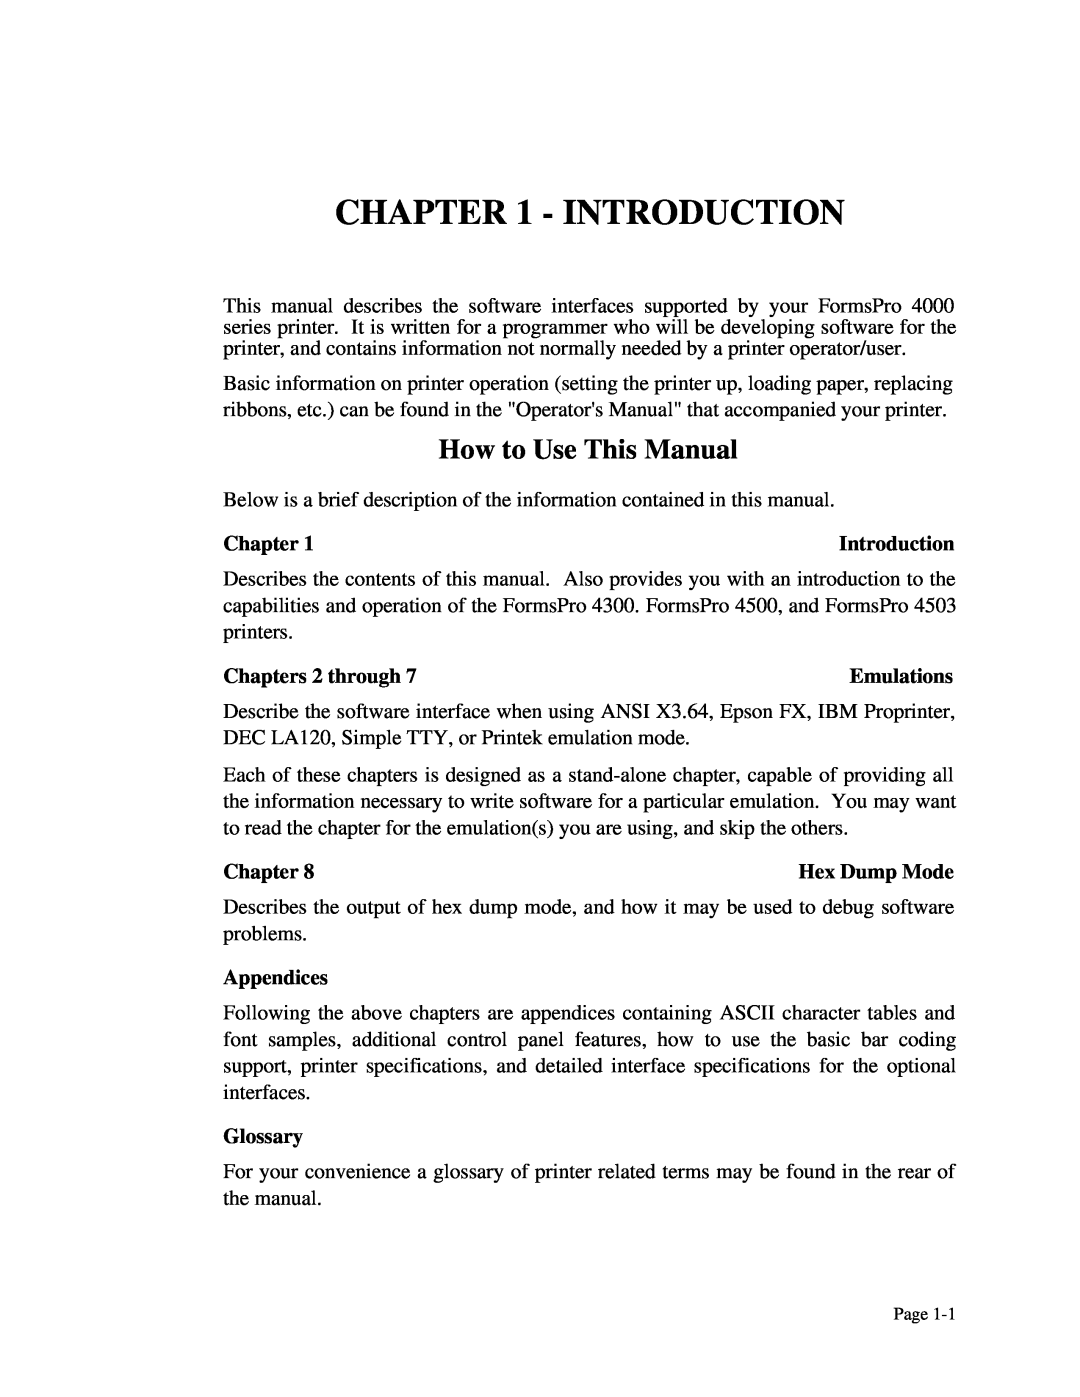 Printek 4503, 4300, 4500 manual Introduction, How to Use This Manual 